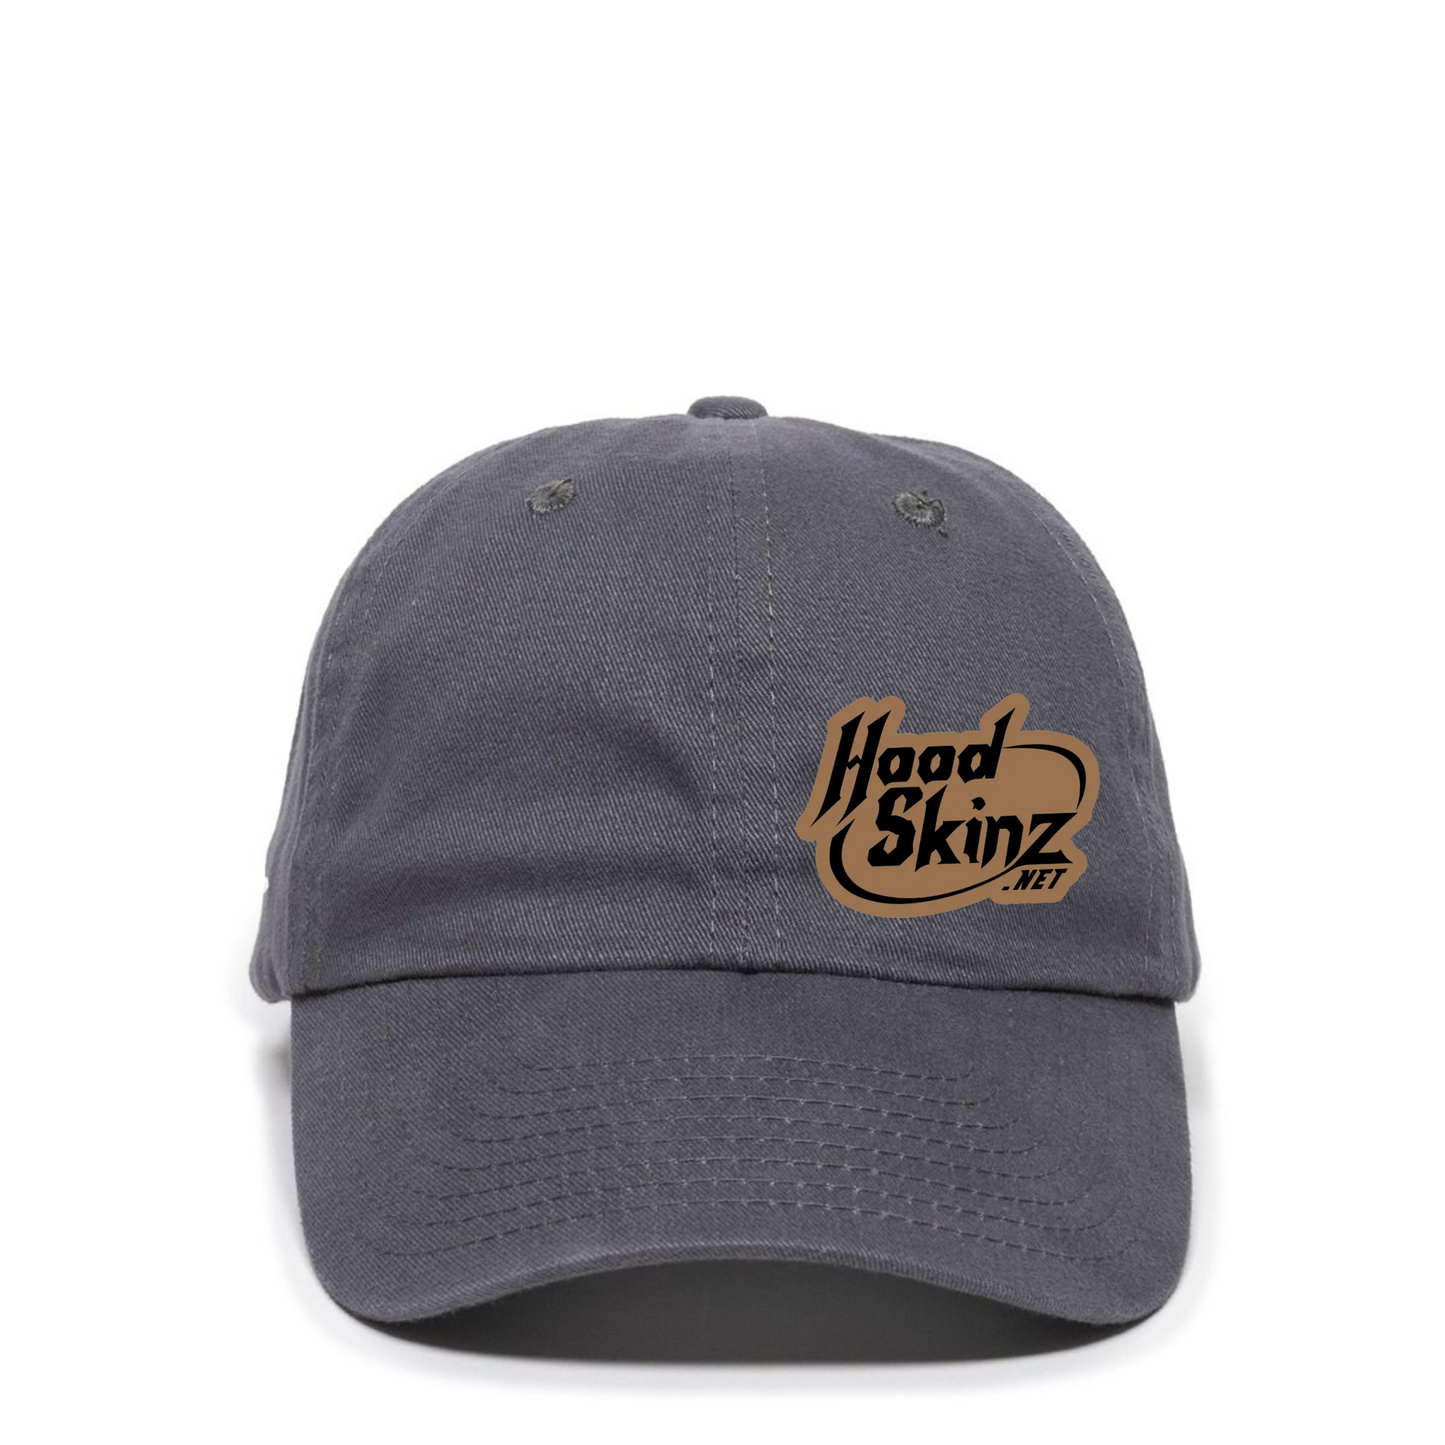 Hood Skinz Unstructured Ball Cap